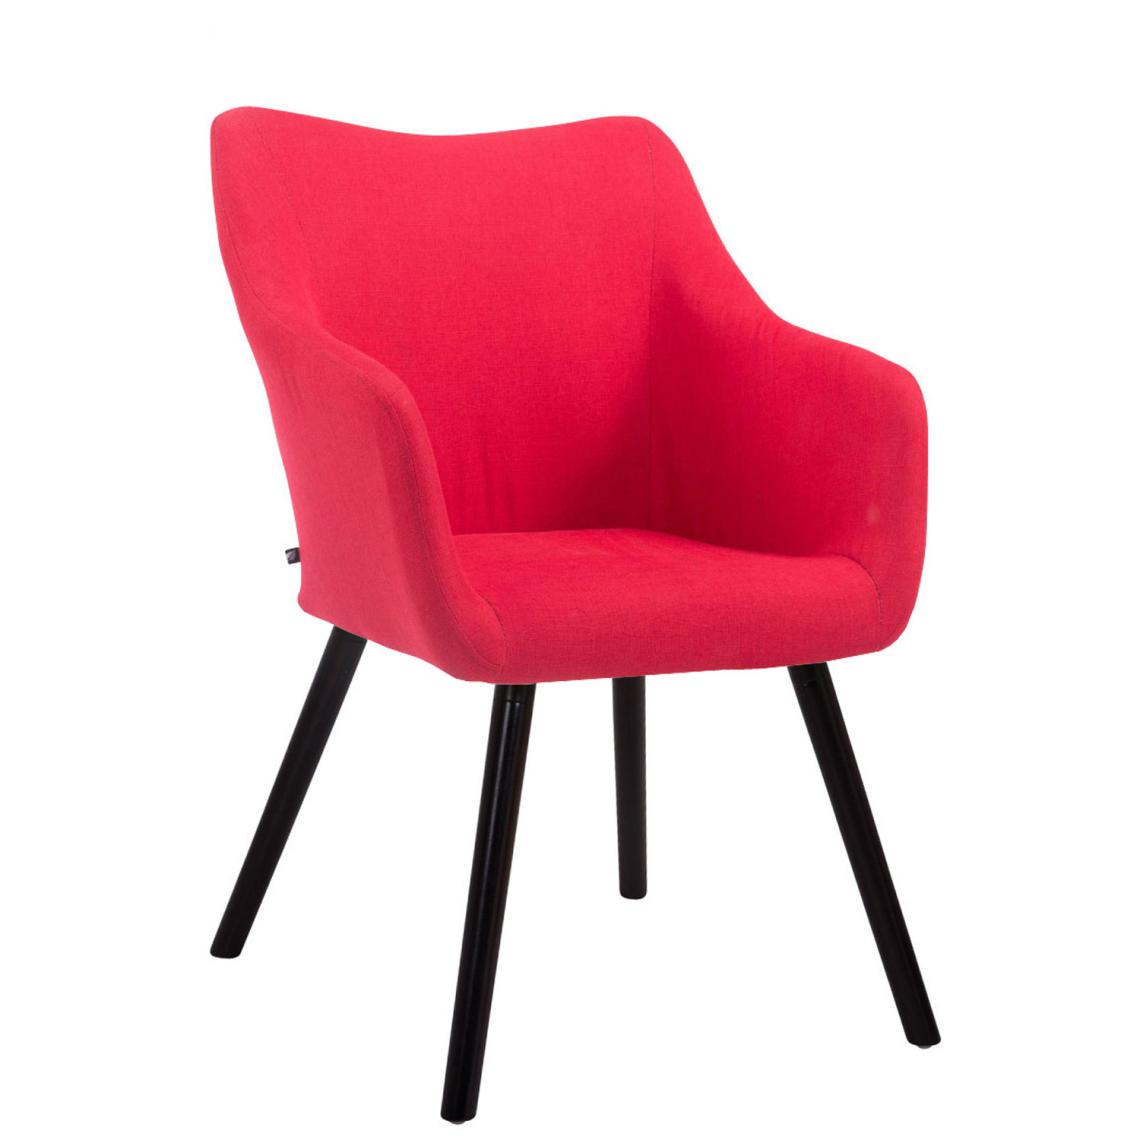 Icaverne - Superbe Chaise visiteur café collection Bamako V2 couleur rouge - Tabourets